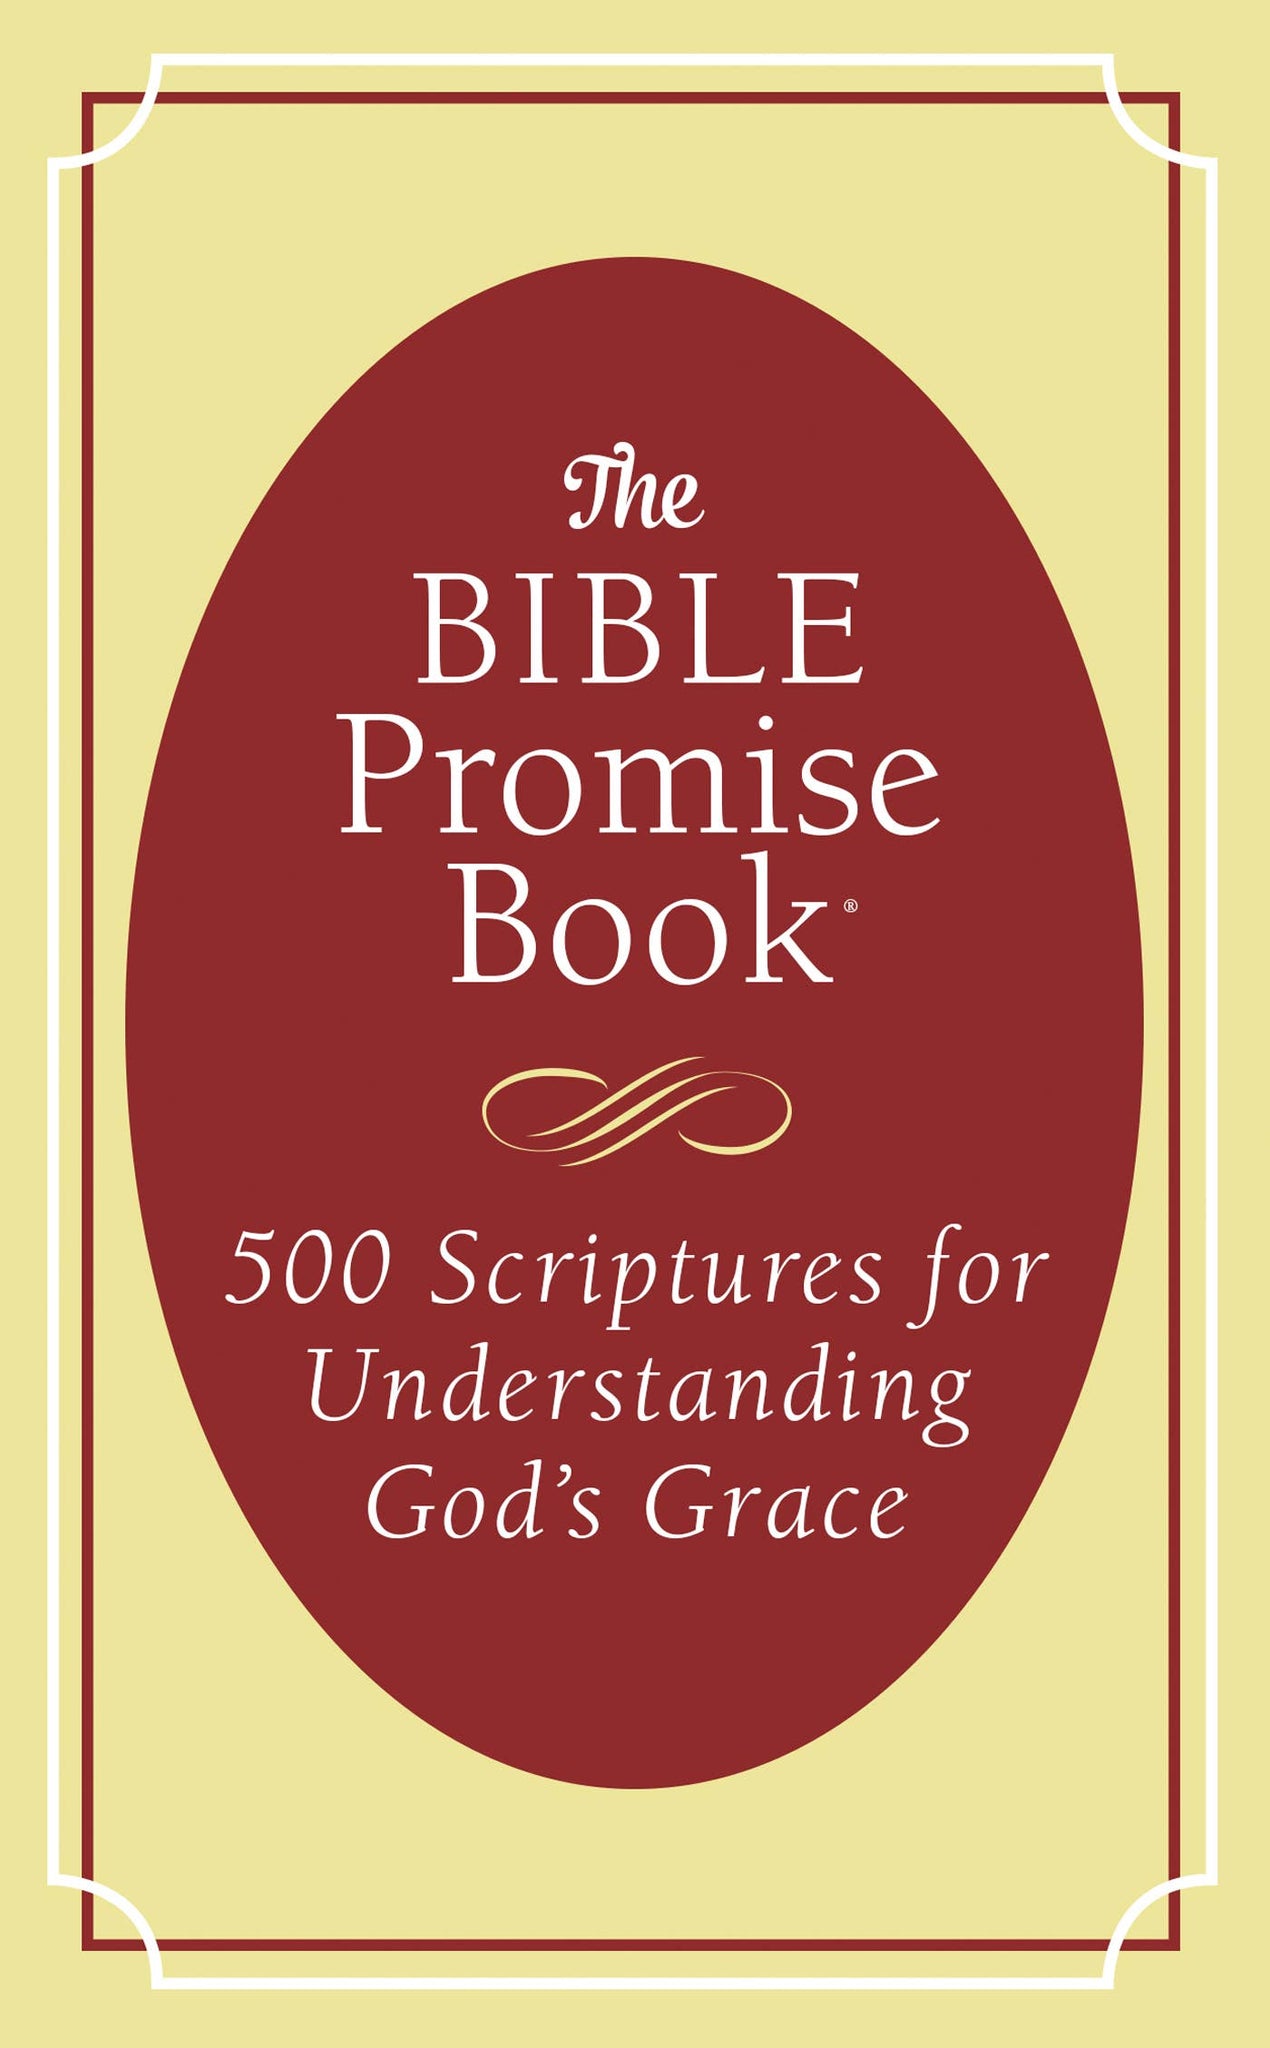 The Bible Promise Book: 500 Scriptures for Understanding God